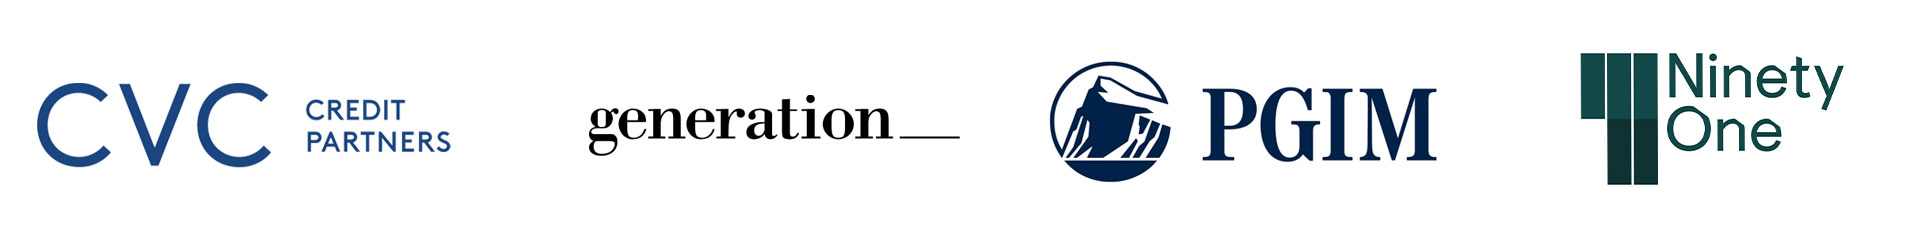 Collection of client logos: PGIM, Generation, Corsair